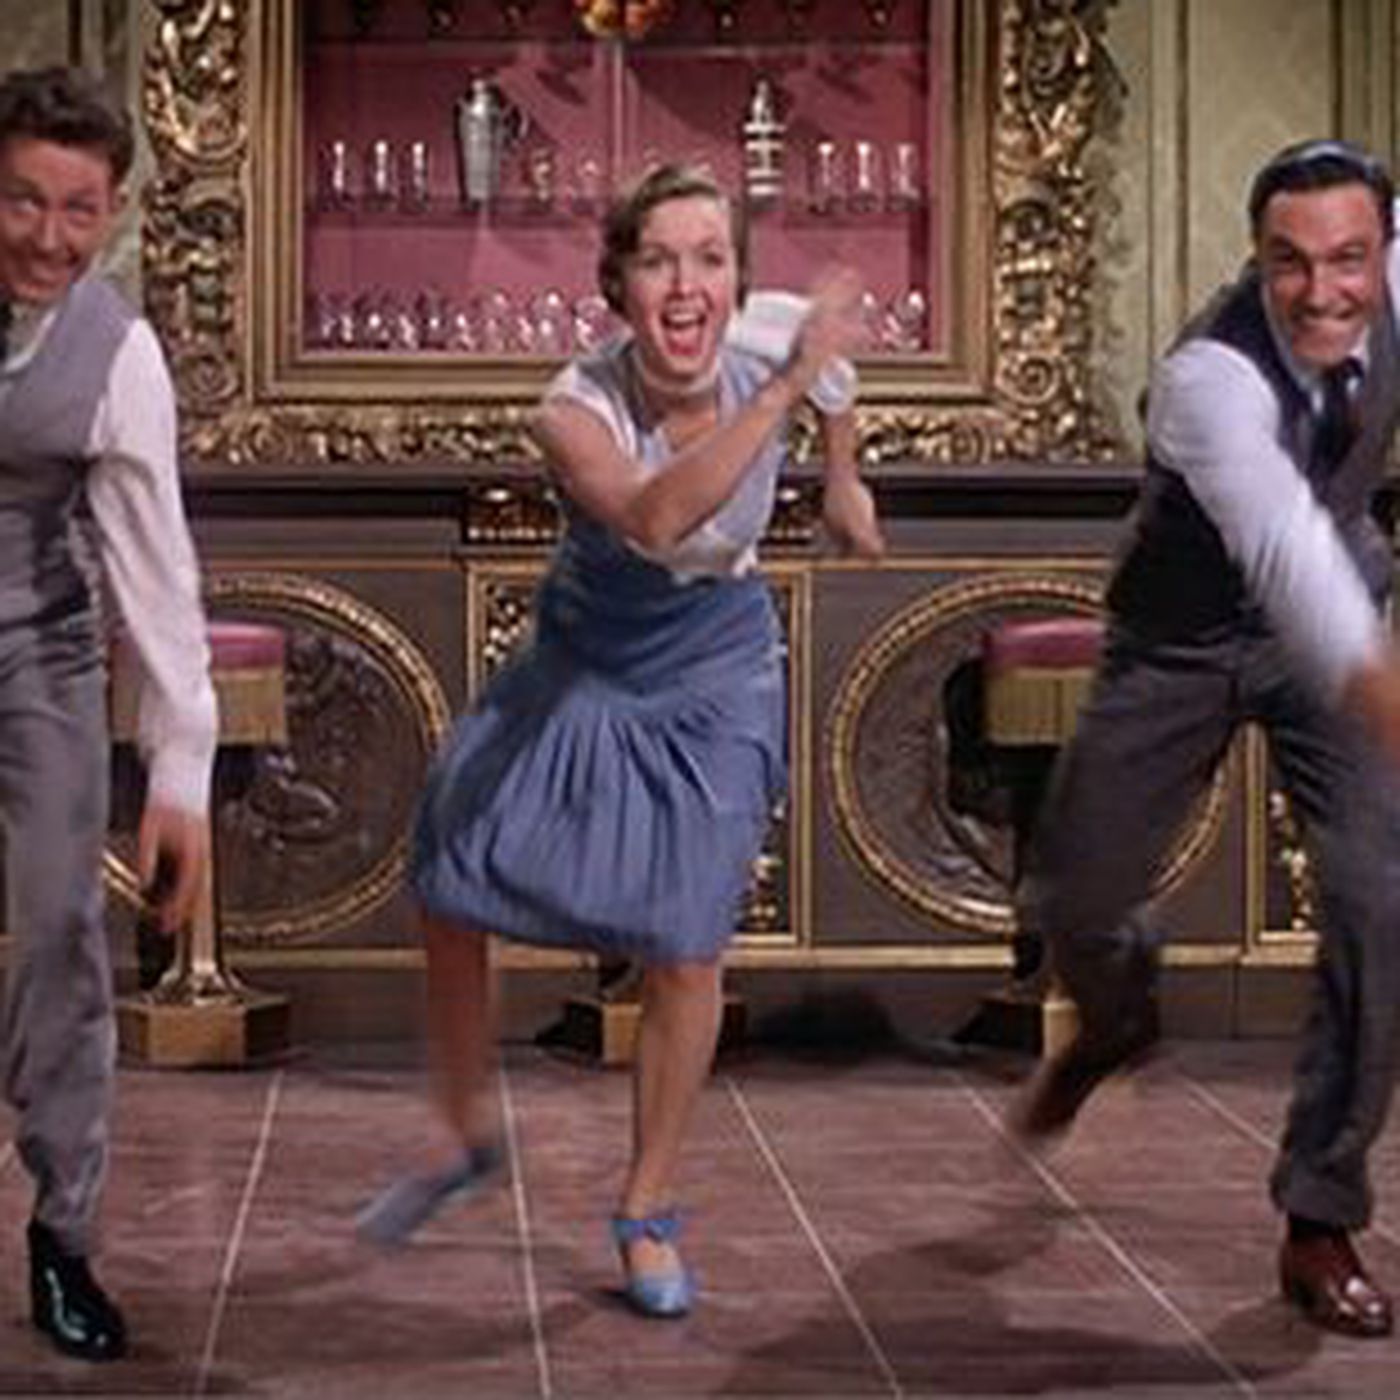 Watch: the Singin' in the Rain scene that made Debbie Reynolds a